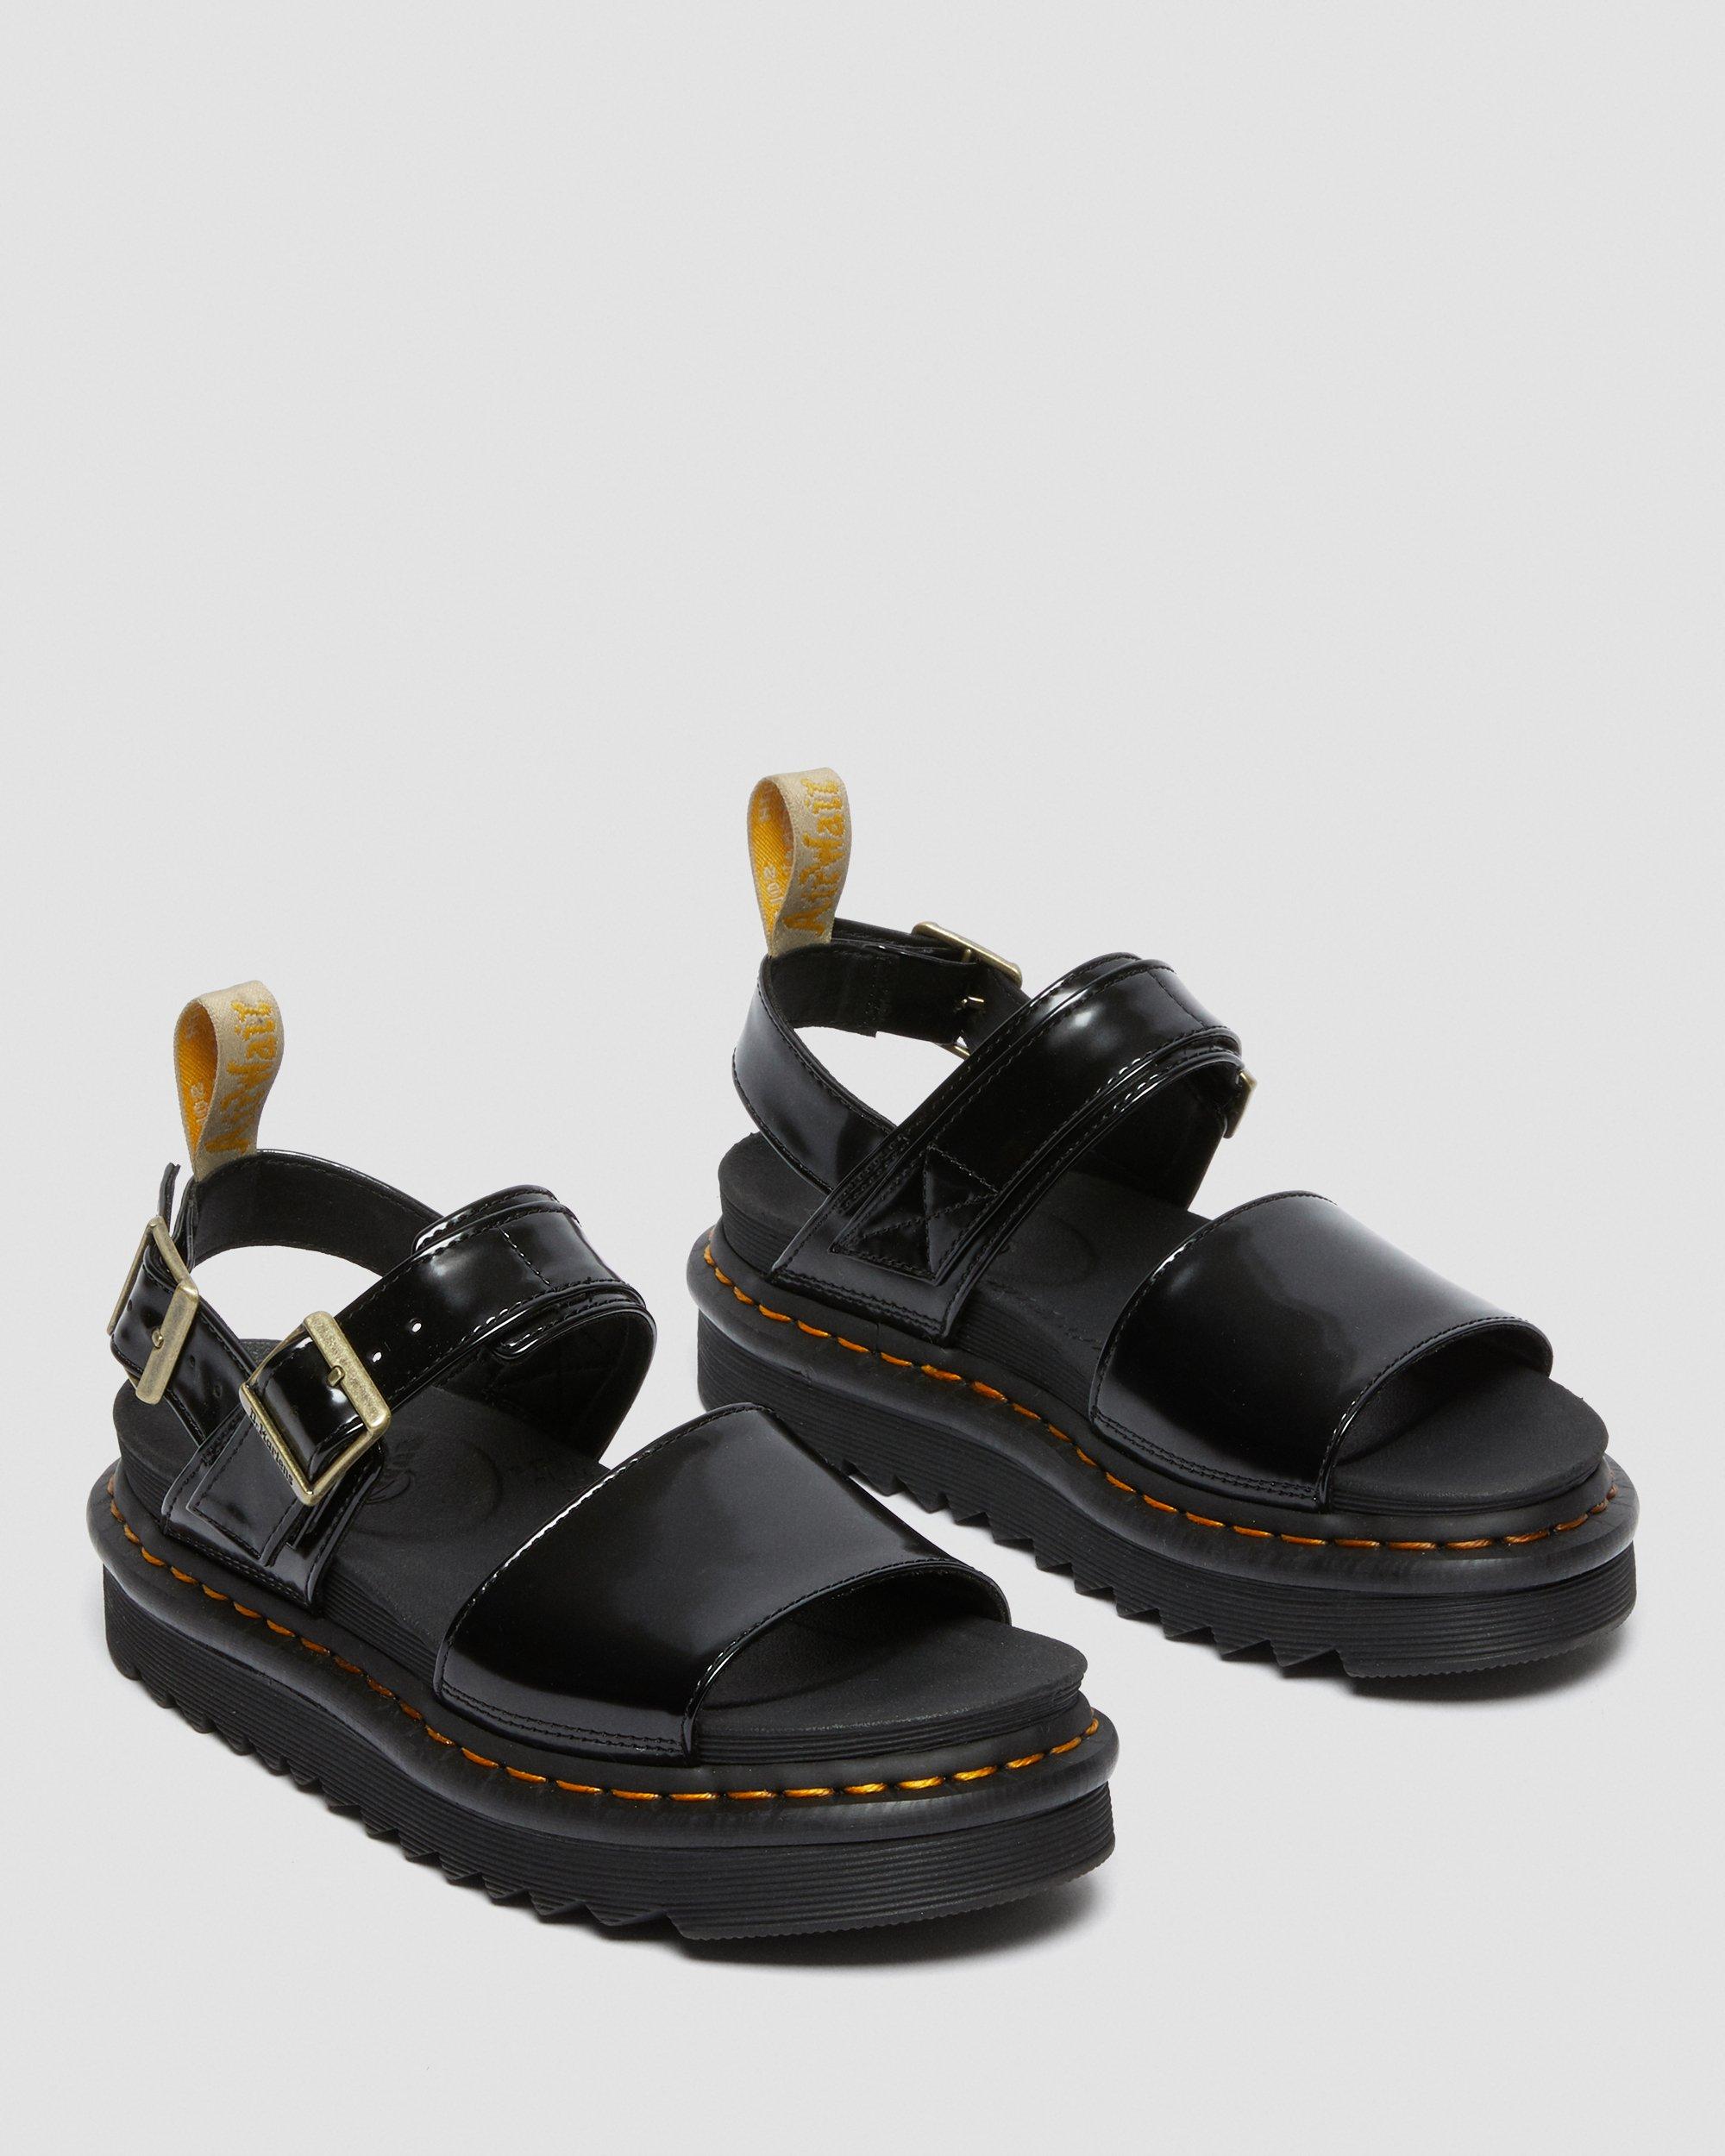 Voss Vegan Strap Sandals in Black